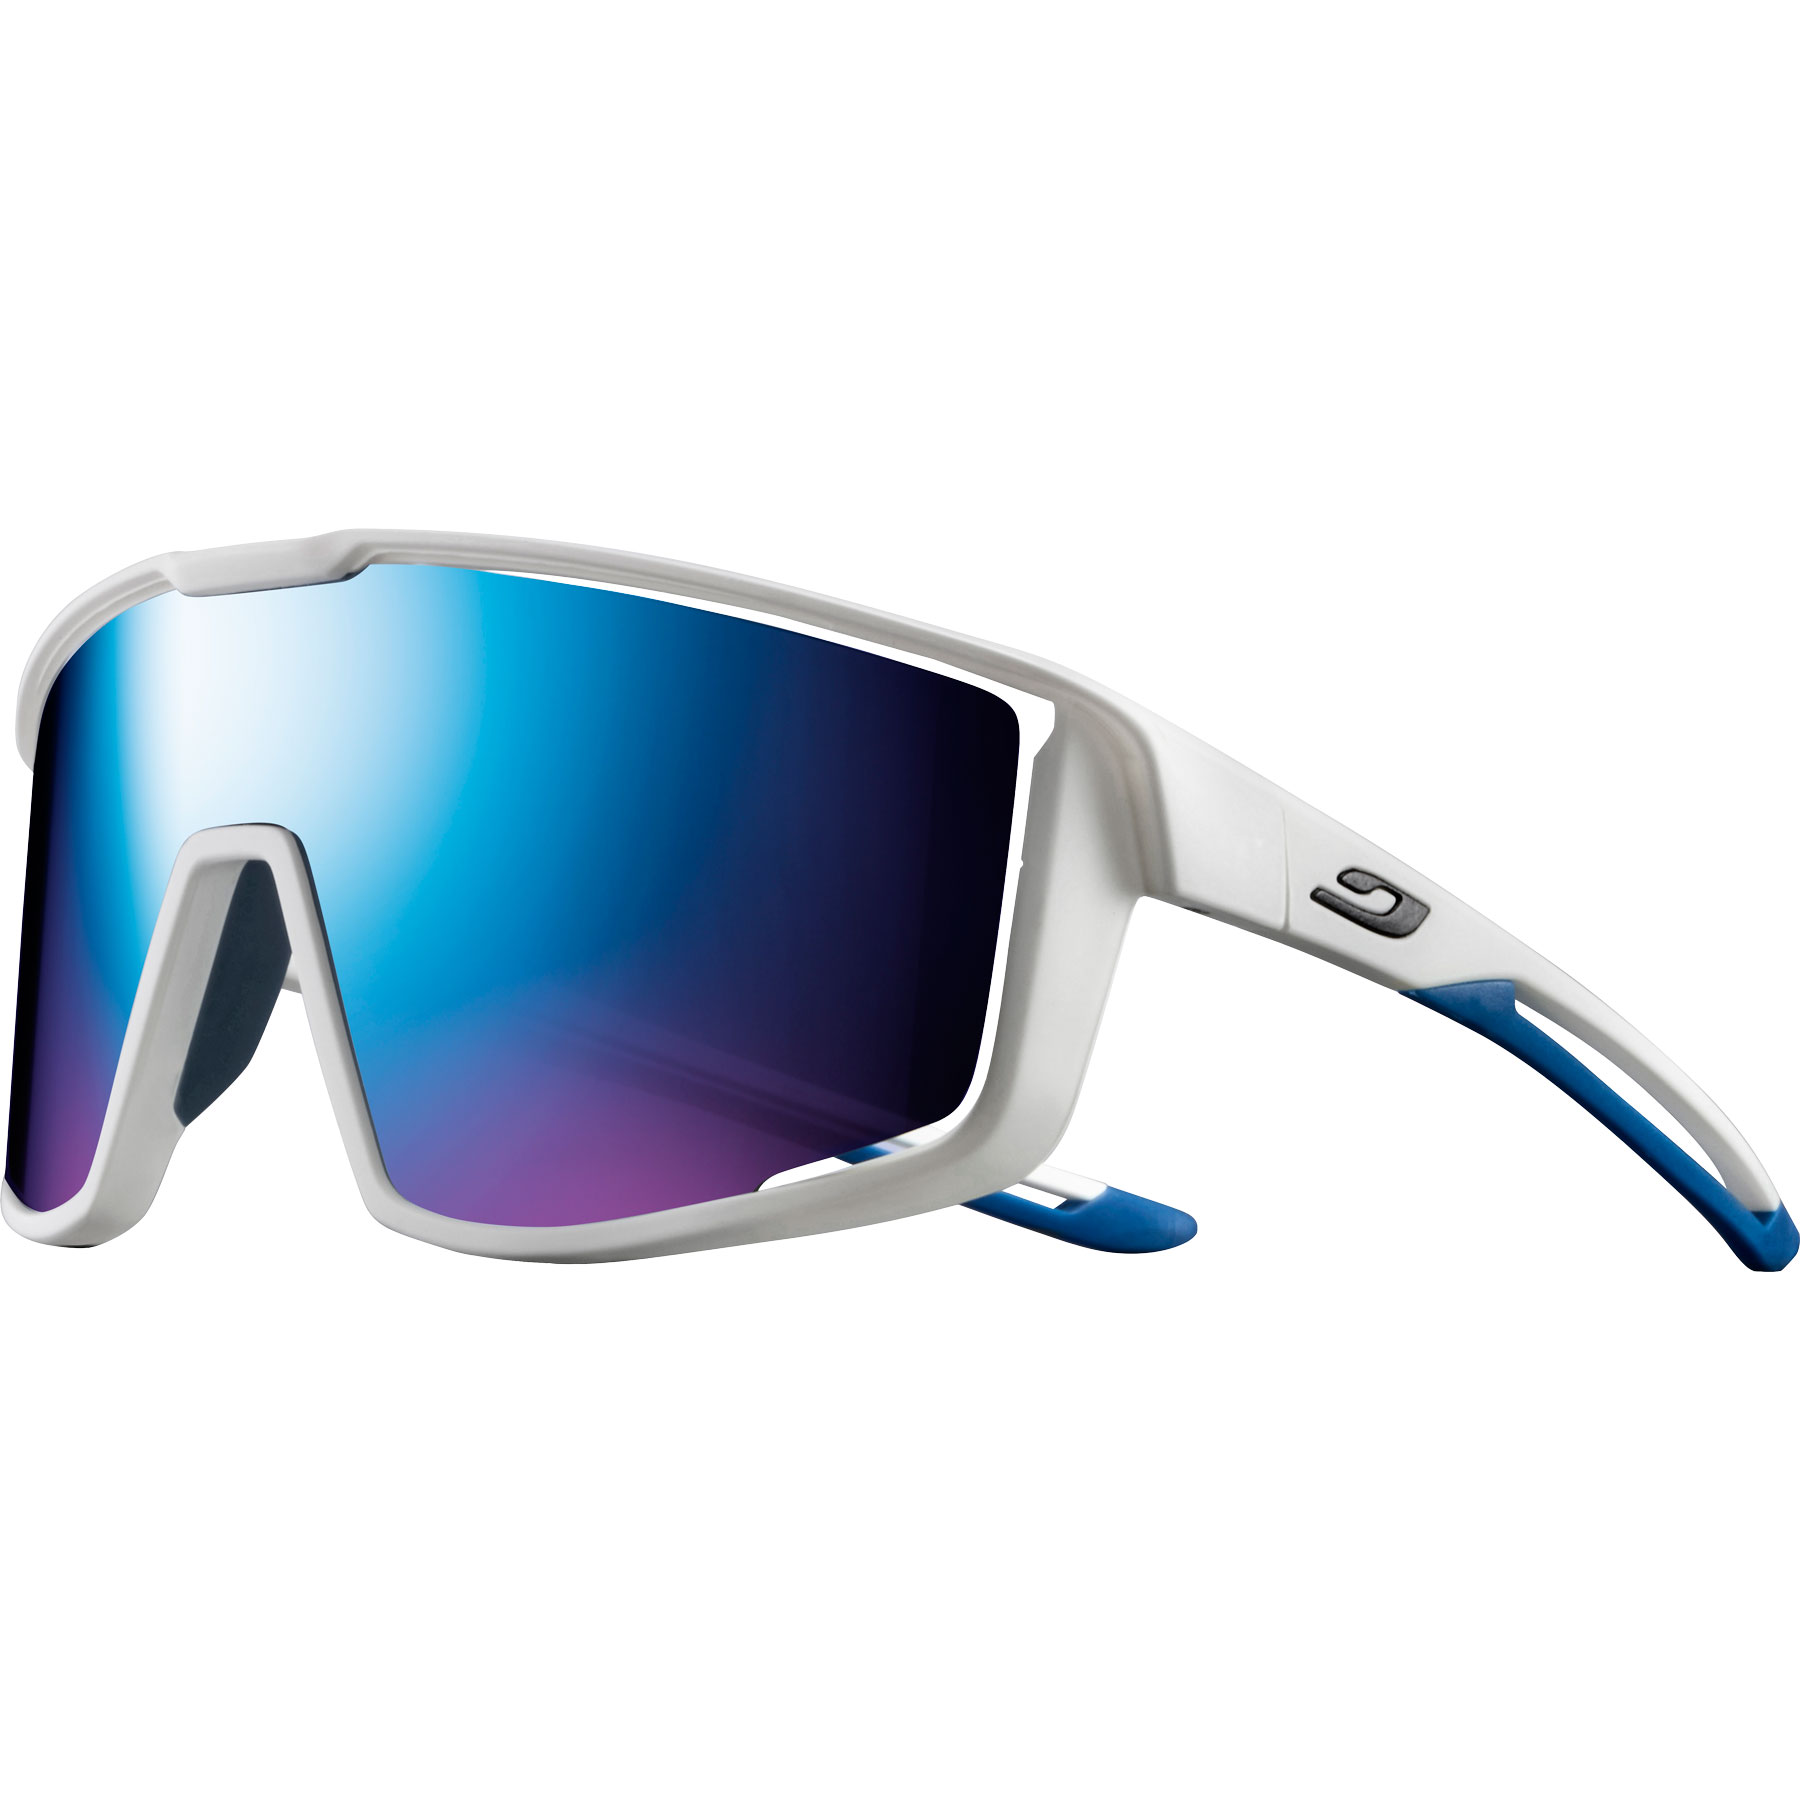 Productfoto van Julbo Fury Spectron 3CF Sunglasses - White Blue / Blue Flash